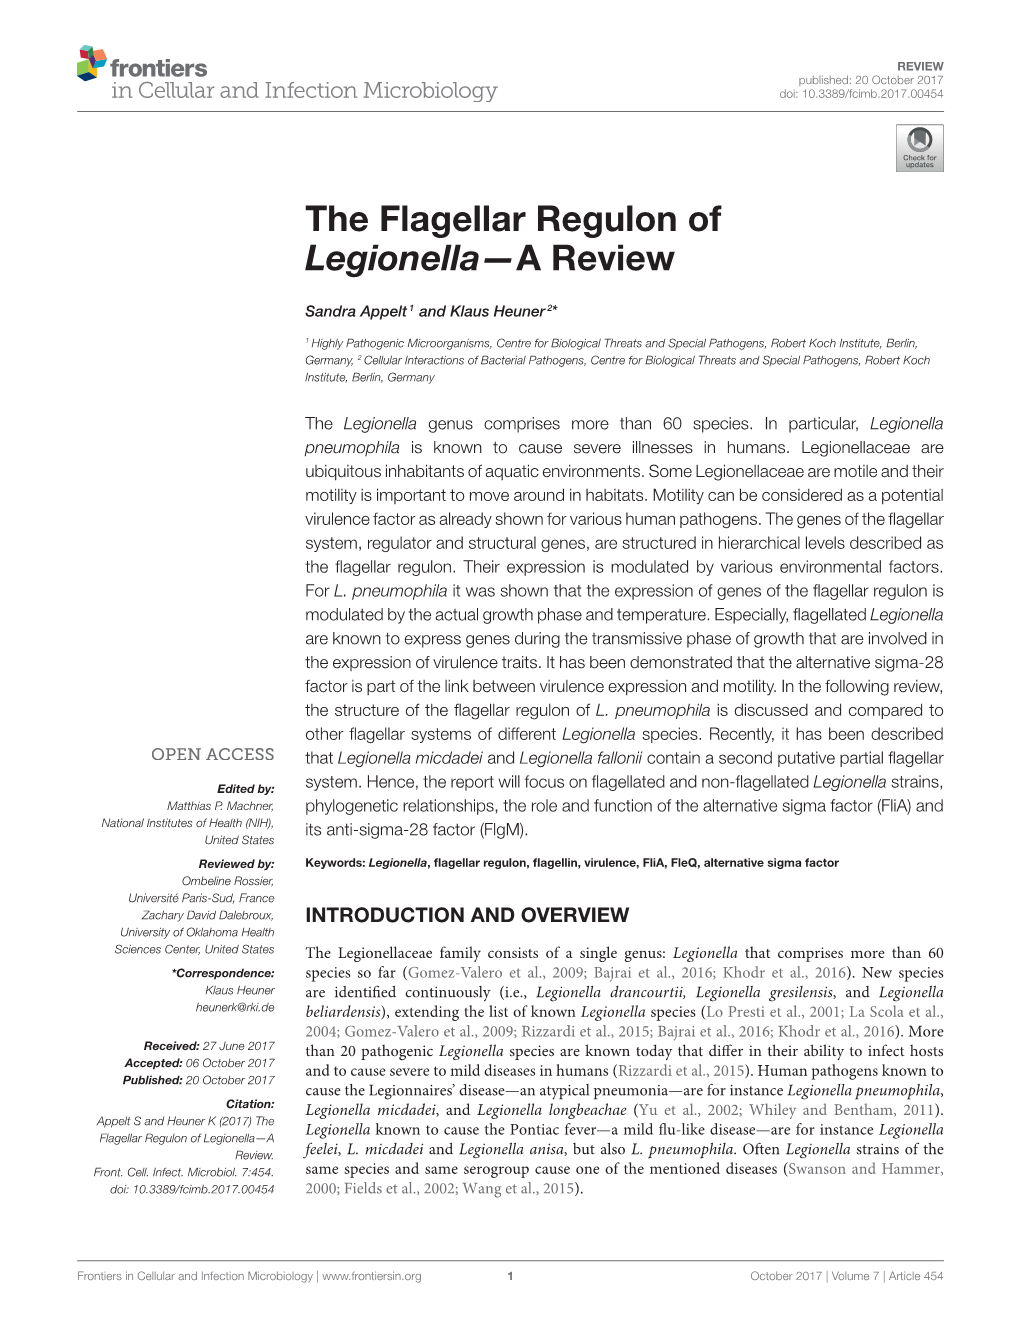 The Flagellar Regulon of Legionella—A Review